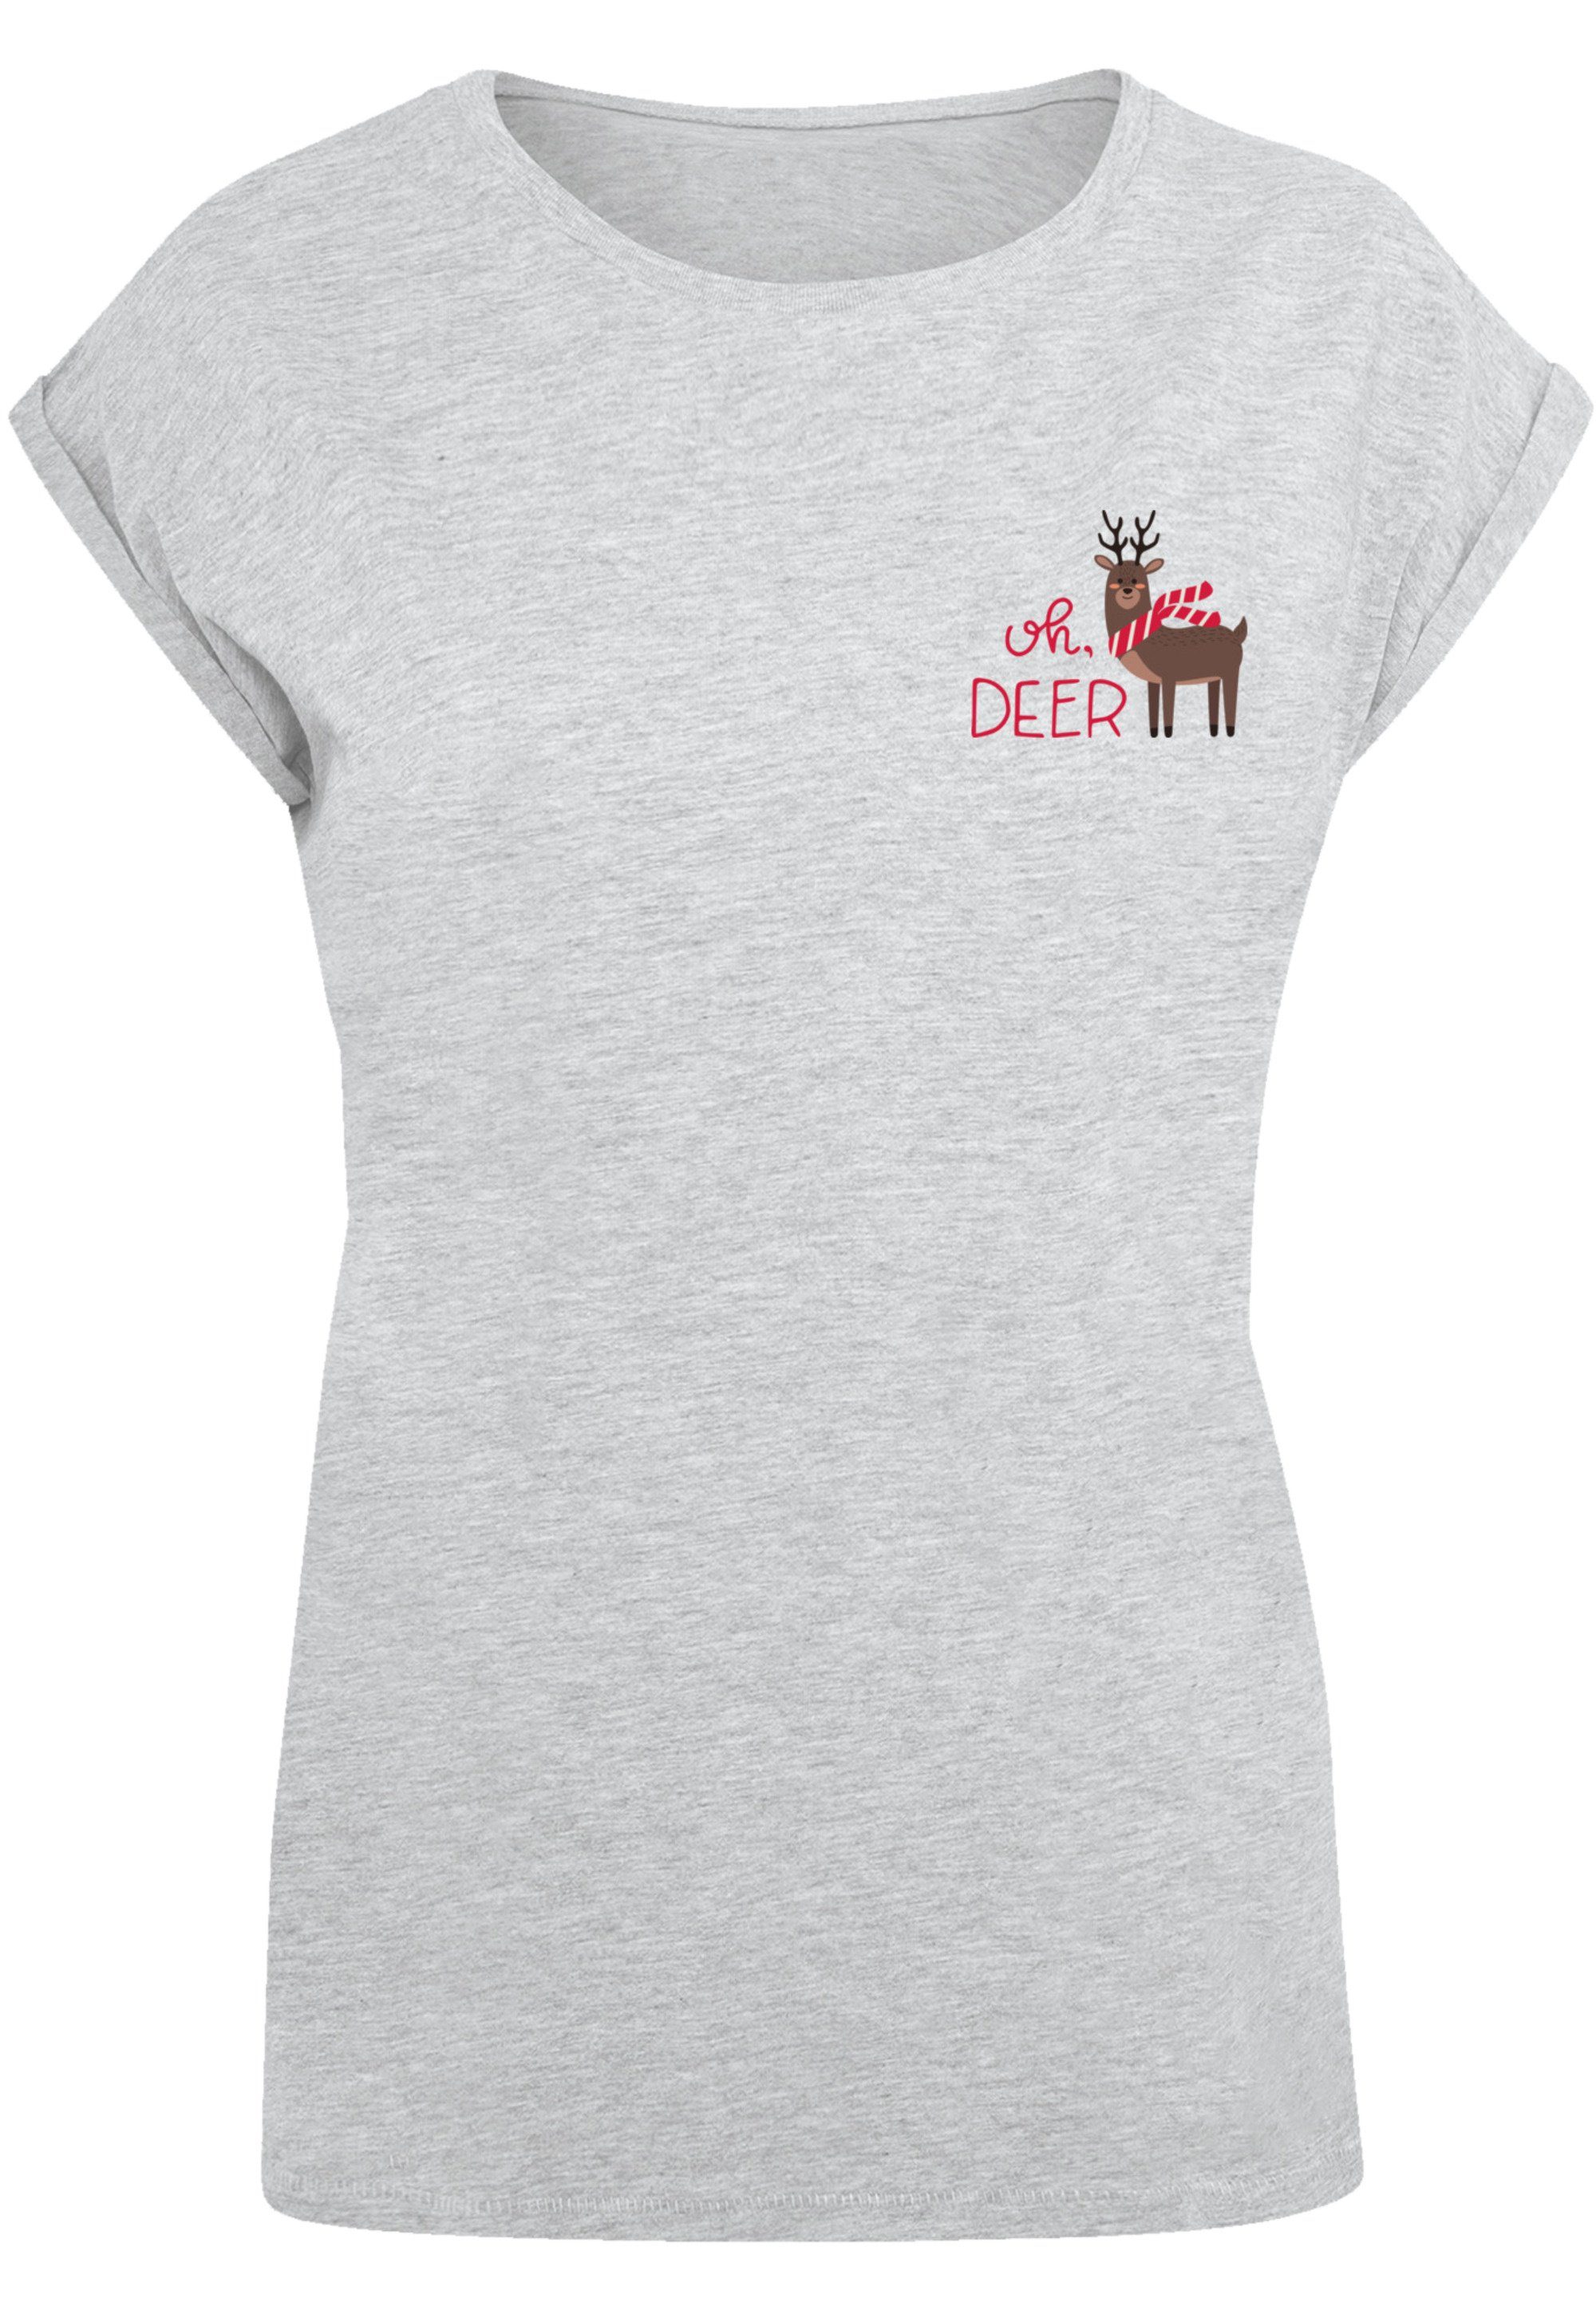 F4NT4STIC T-Shirt Christmas Deer Premium Band grey heather Rock-Musik, Qualität